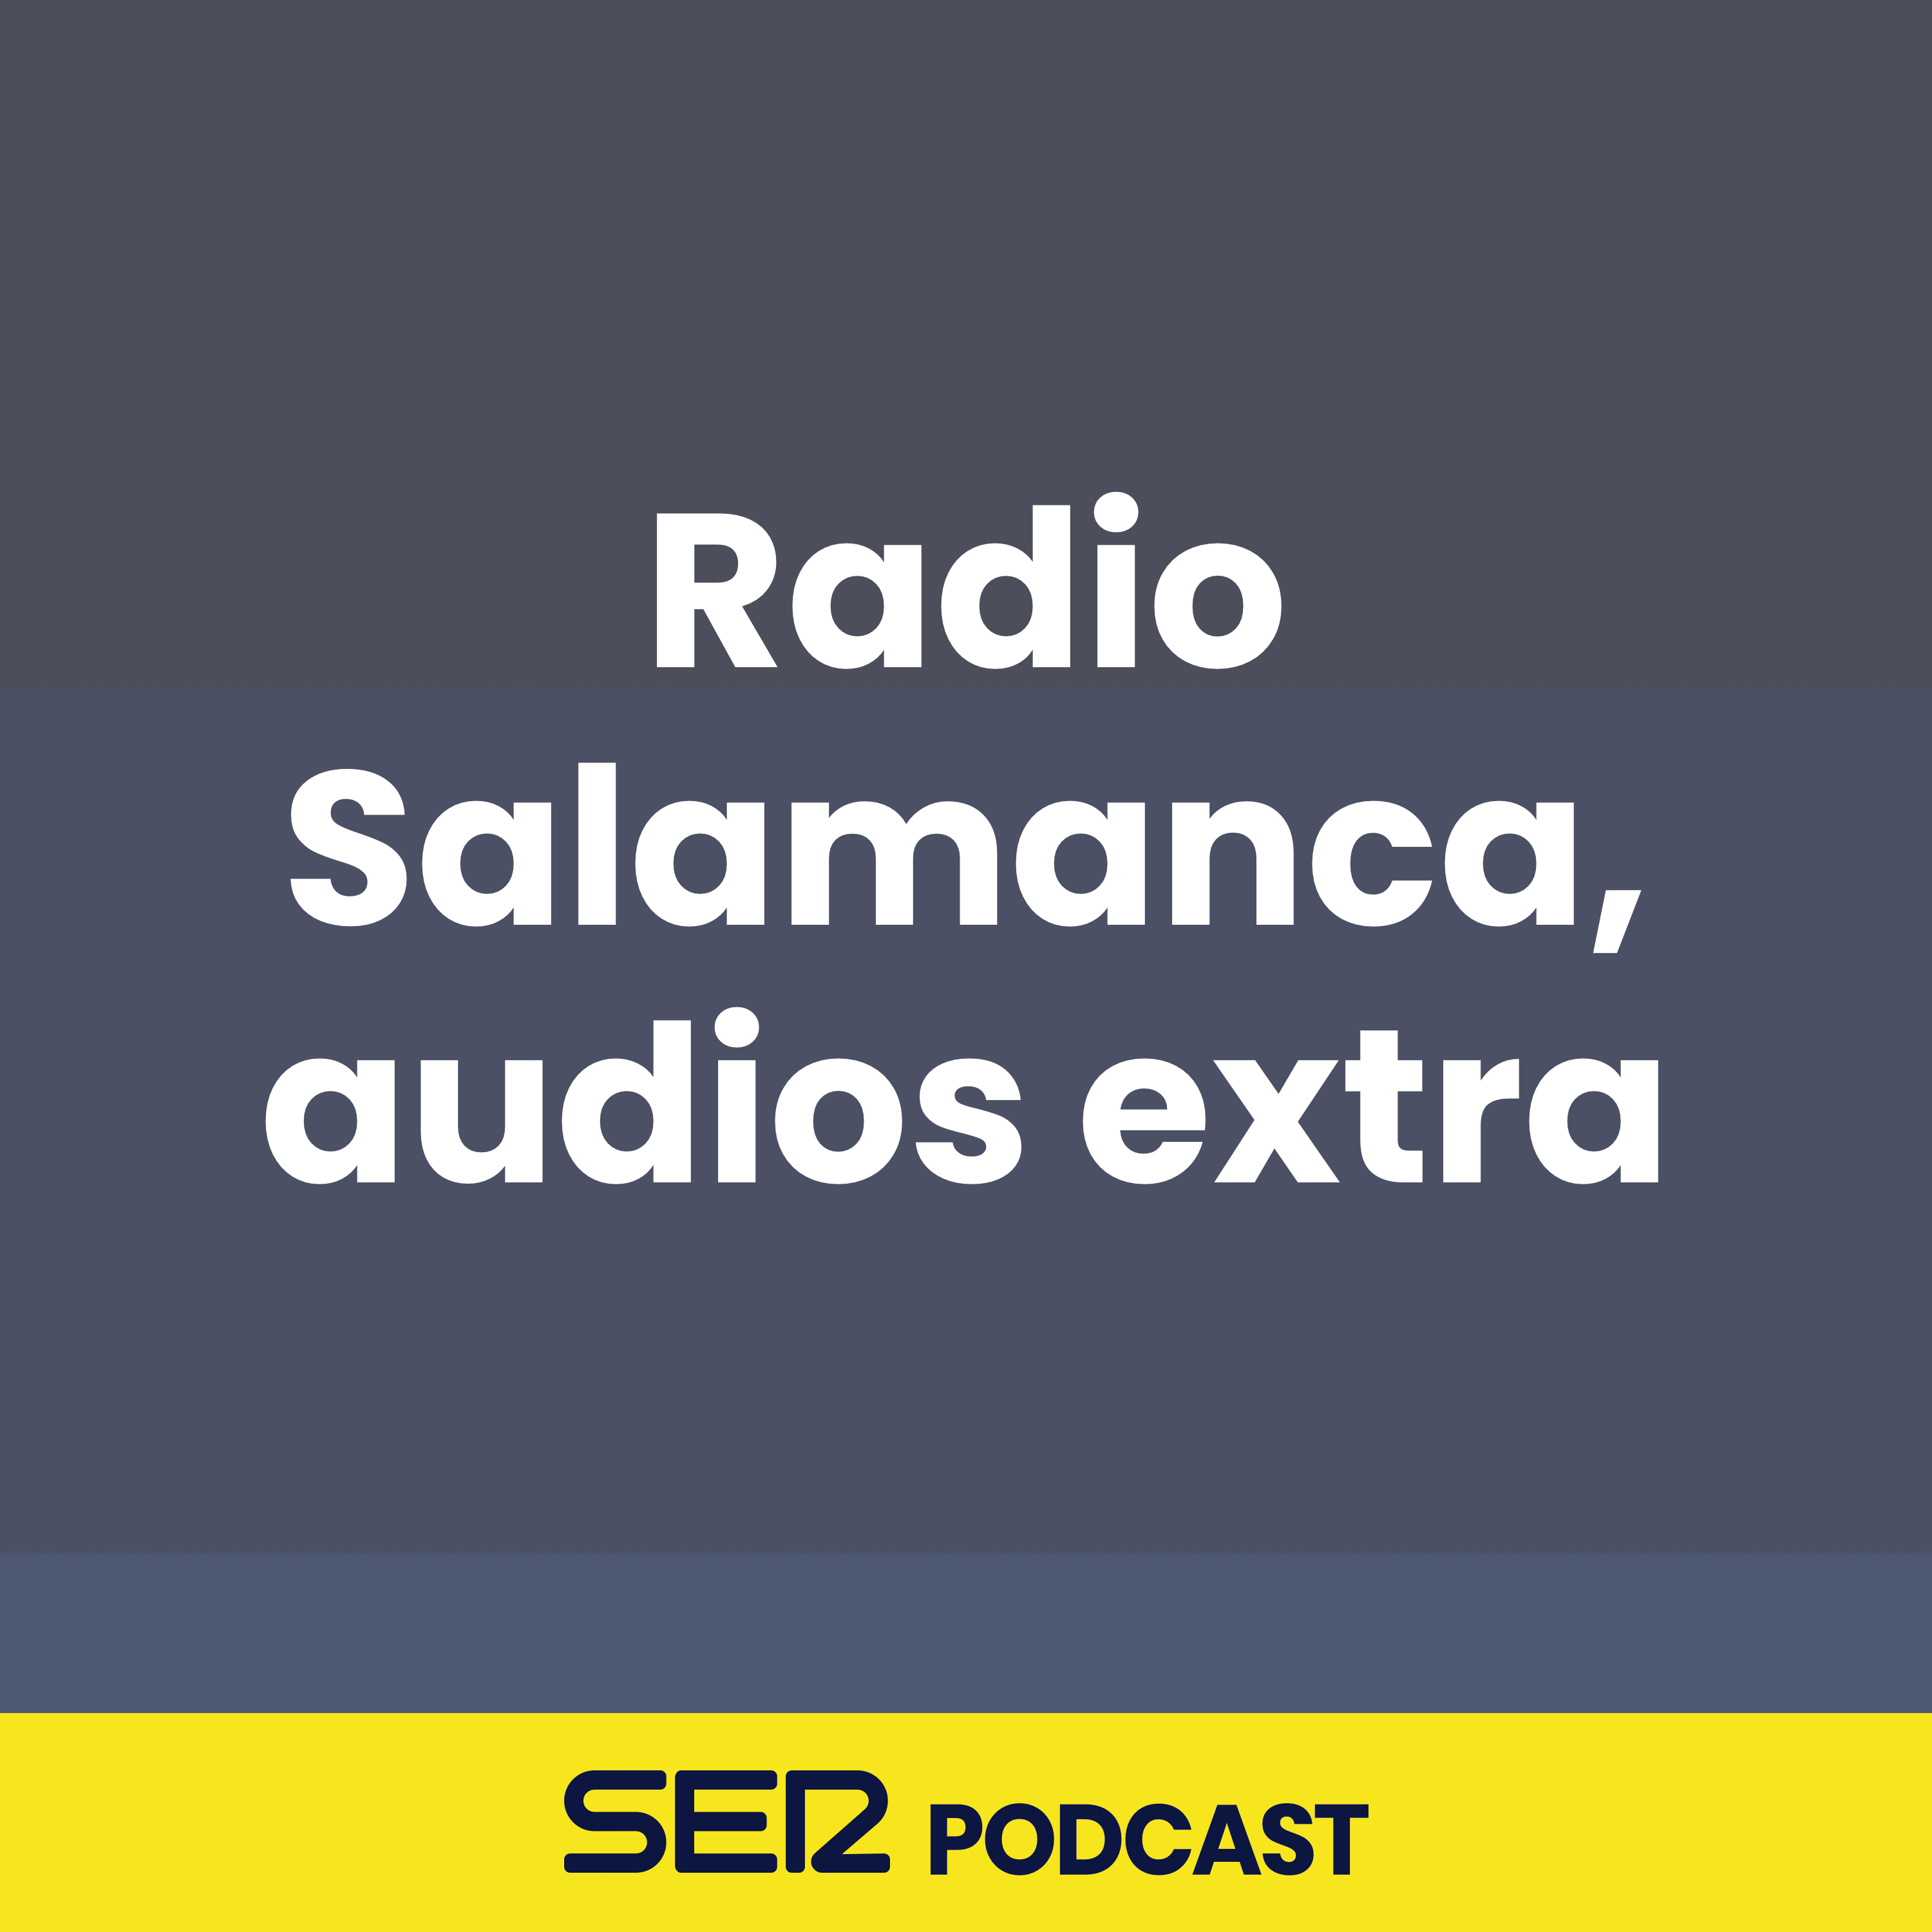 Radio Salamanca, audios extra